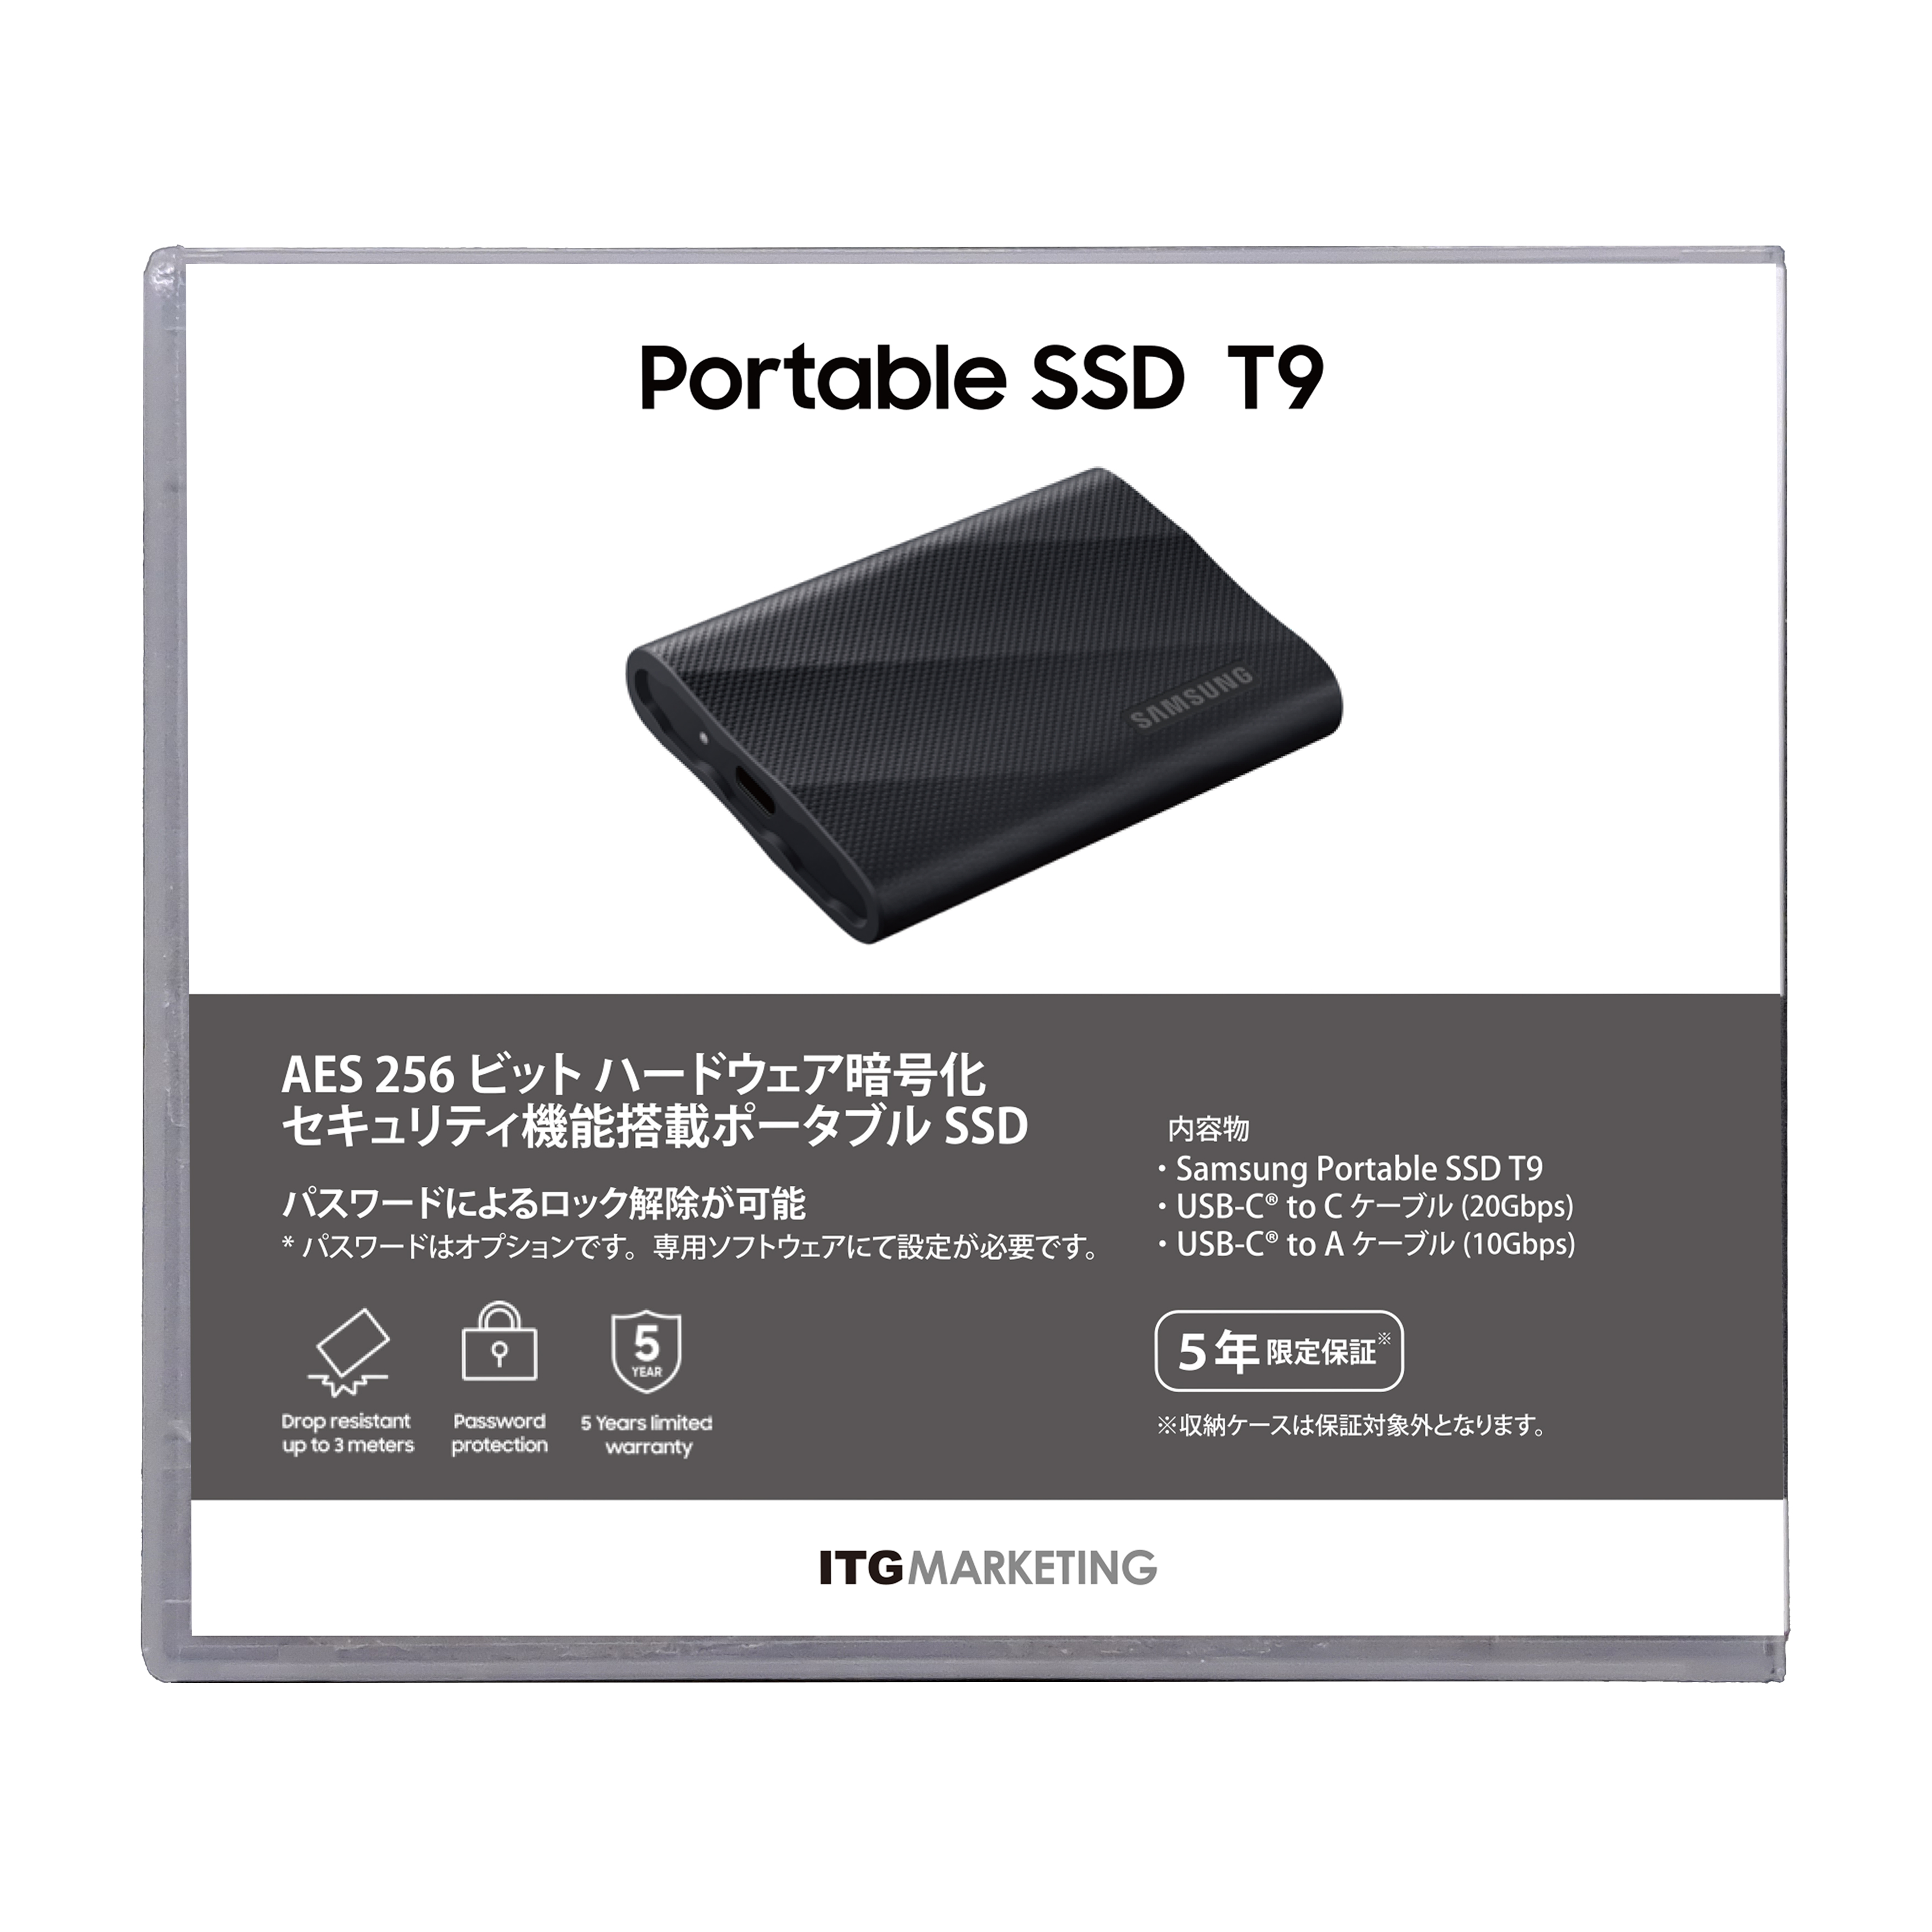 Portable SSD T9 (4TB) 放送局向け専用ケース入りモデル